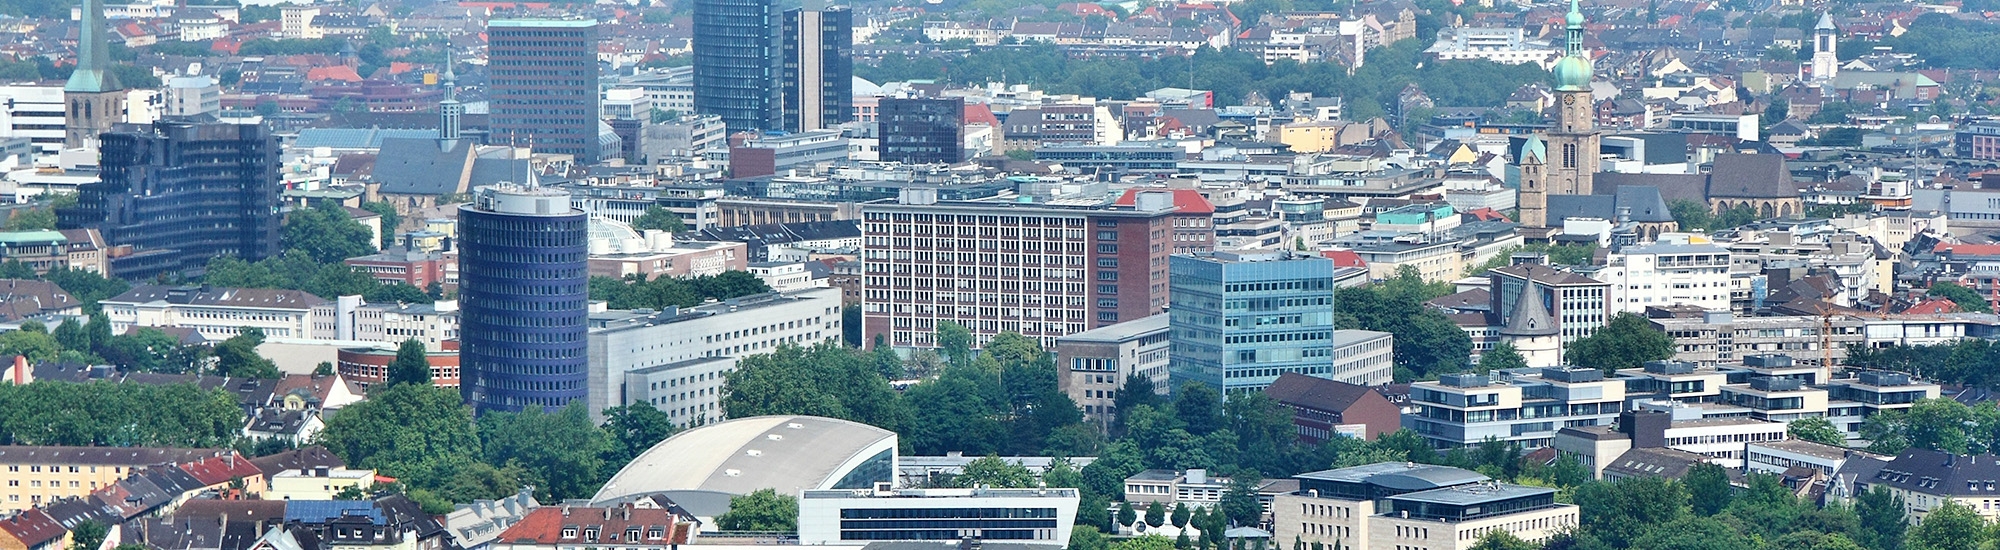 Immobilien Dortmund